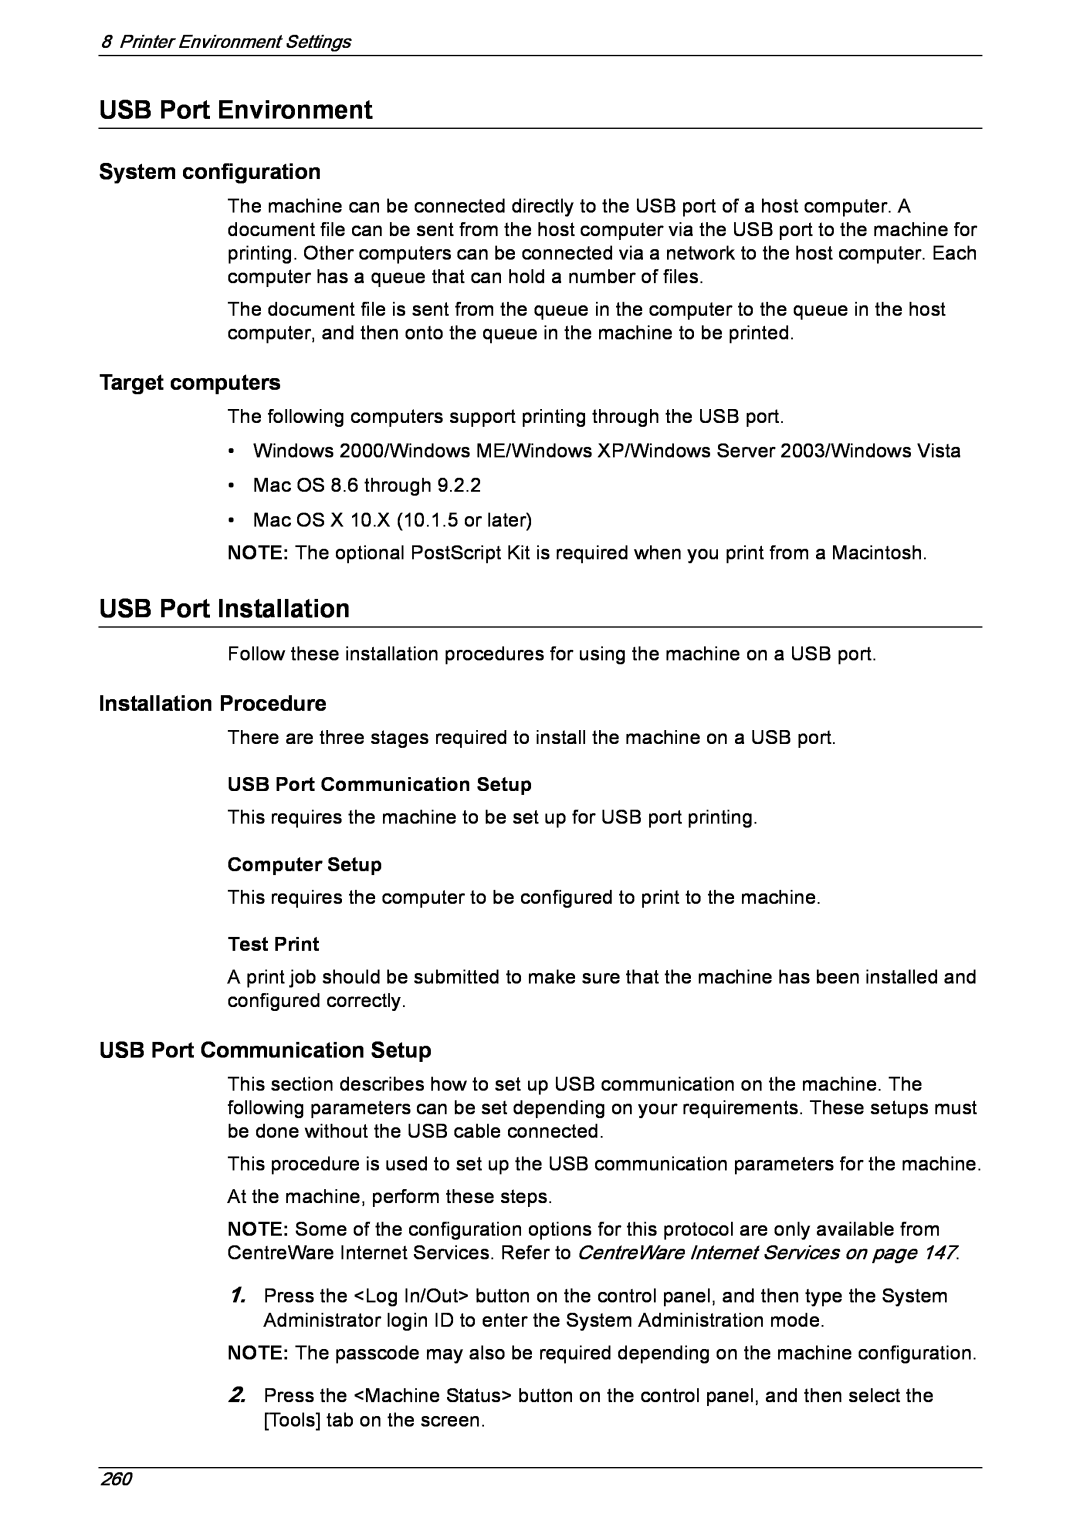 Xerox 5222 manual USB Port Environment, USB Port Installation, USB Port Communication Setup, Computer Setup, Test Print 